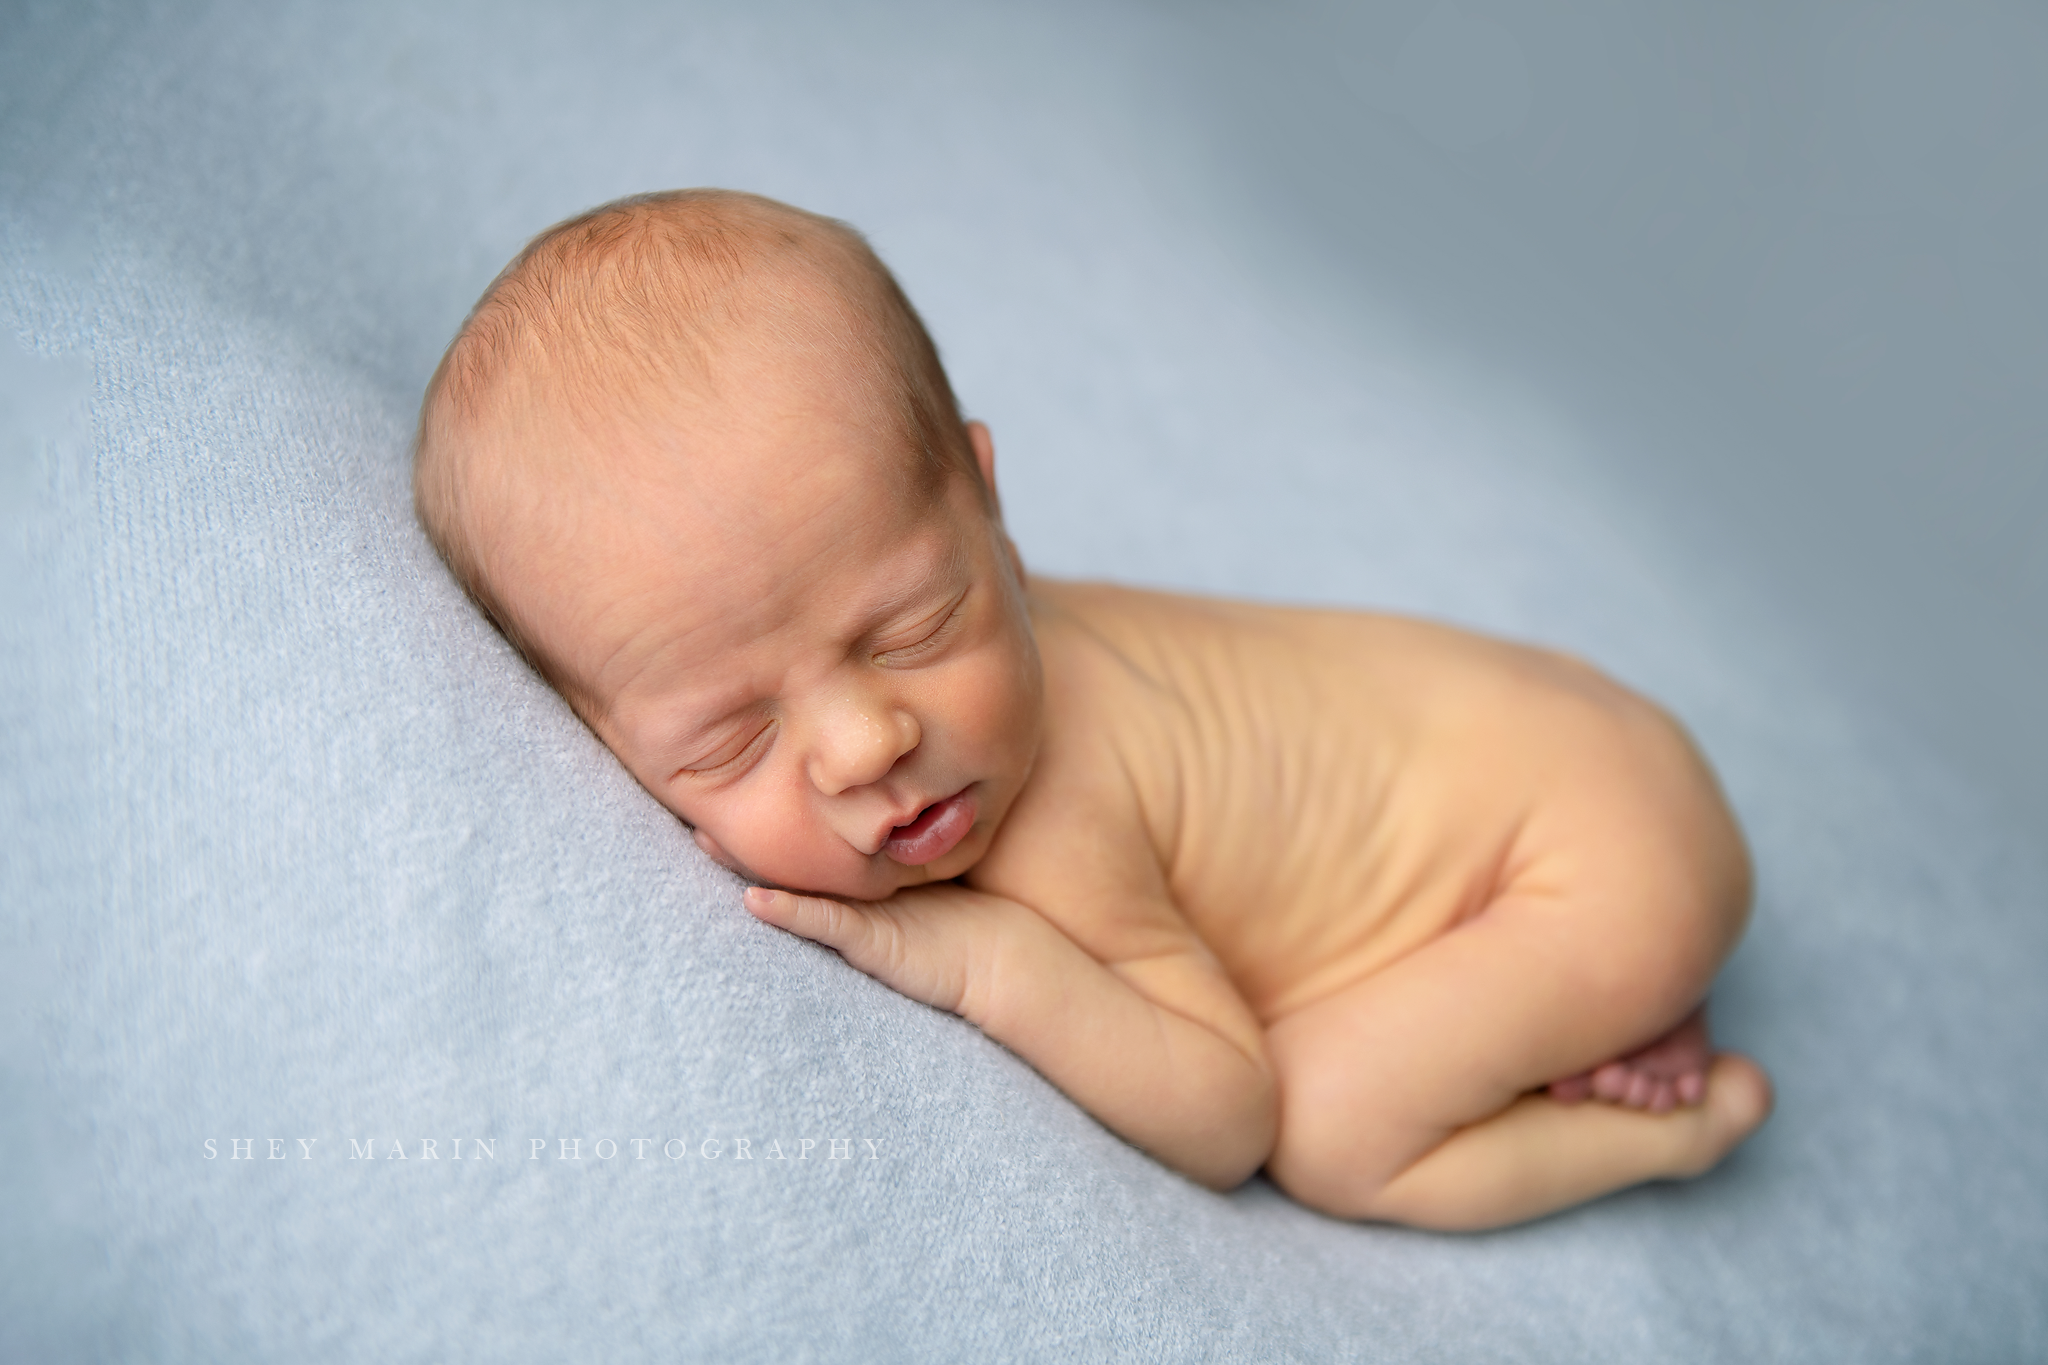 newborn baby posed on blue blanket